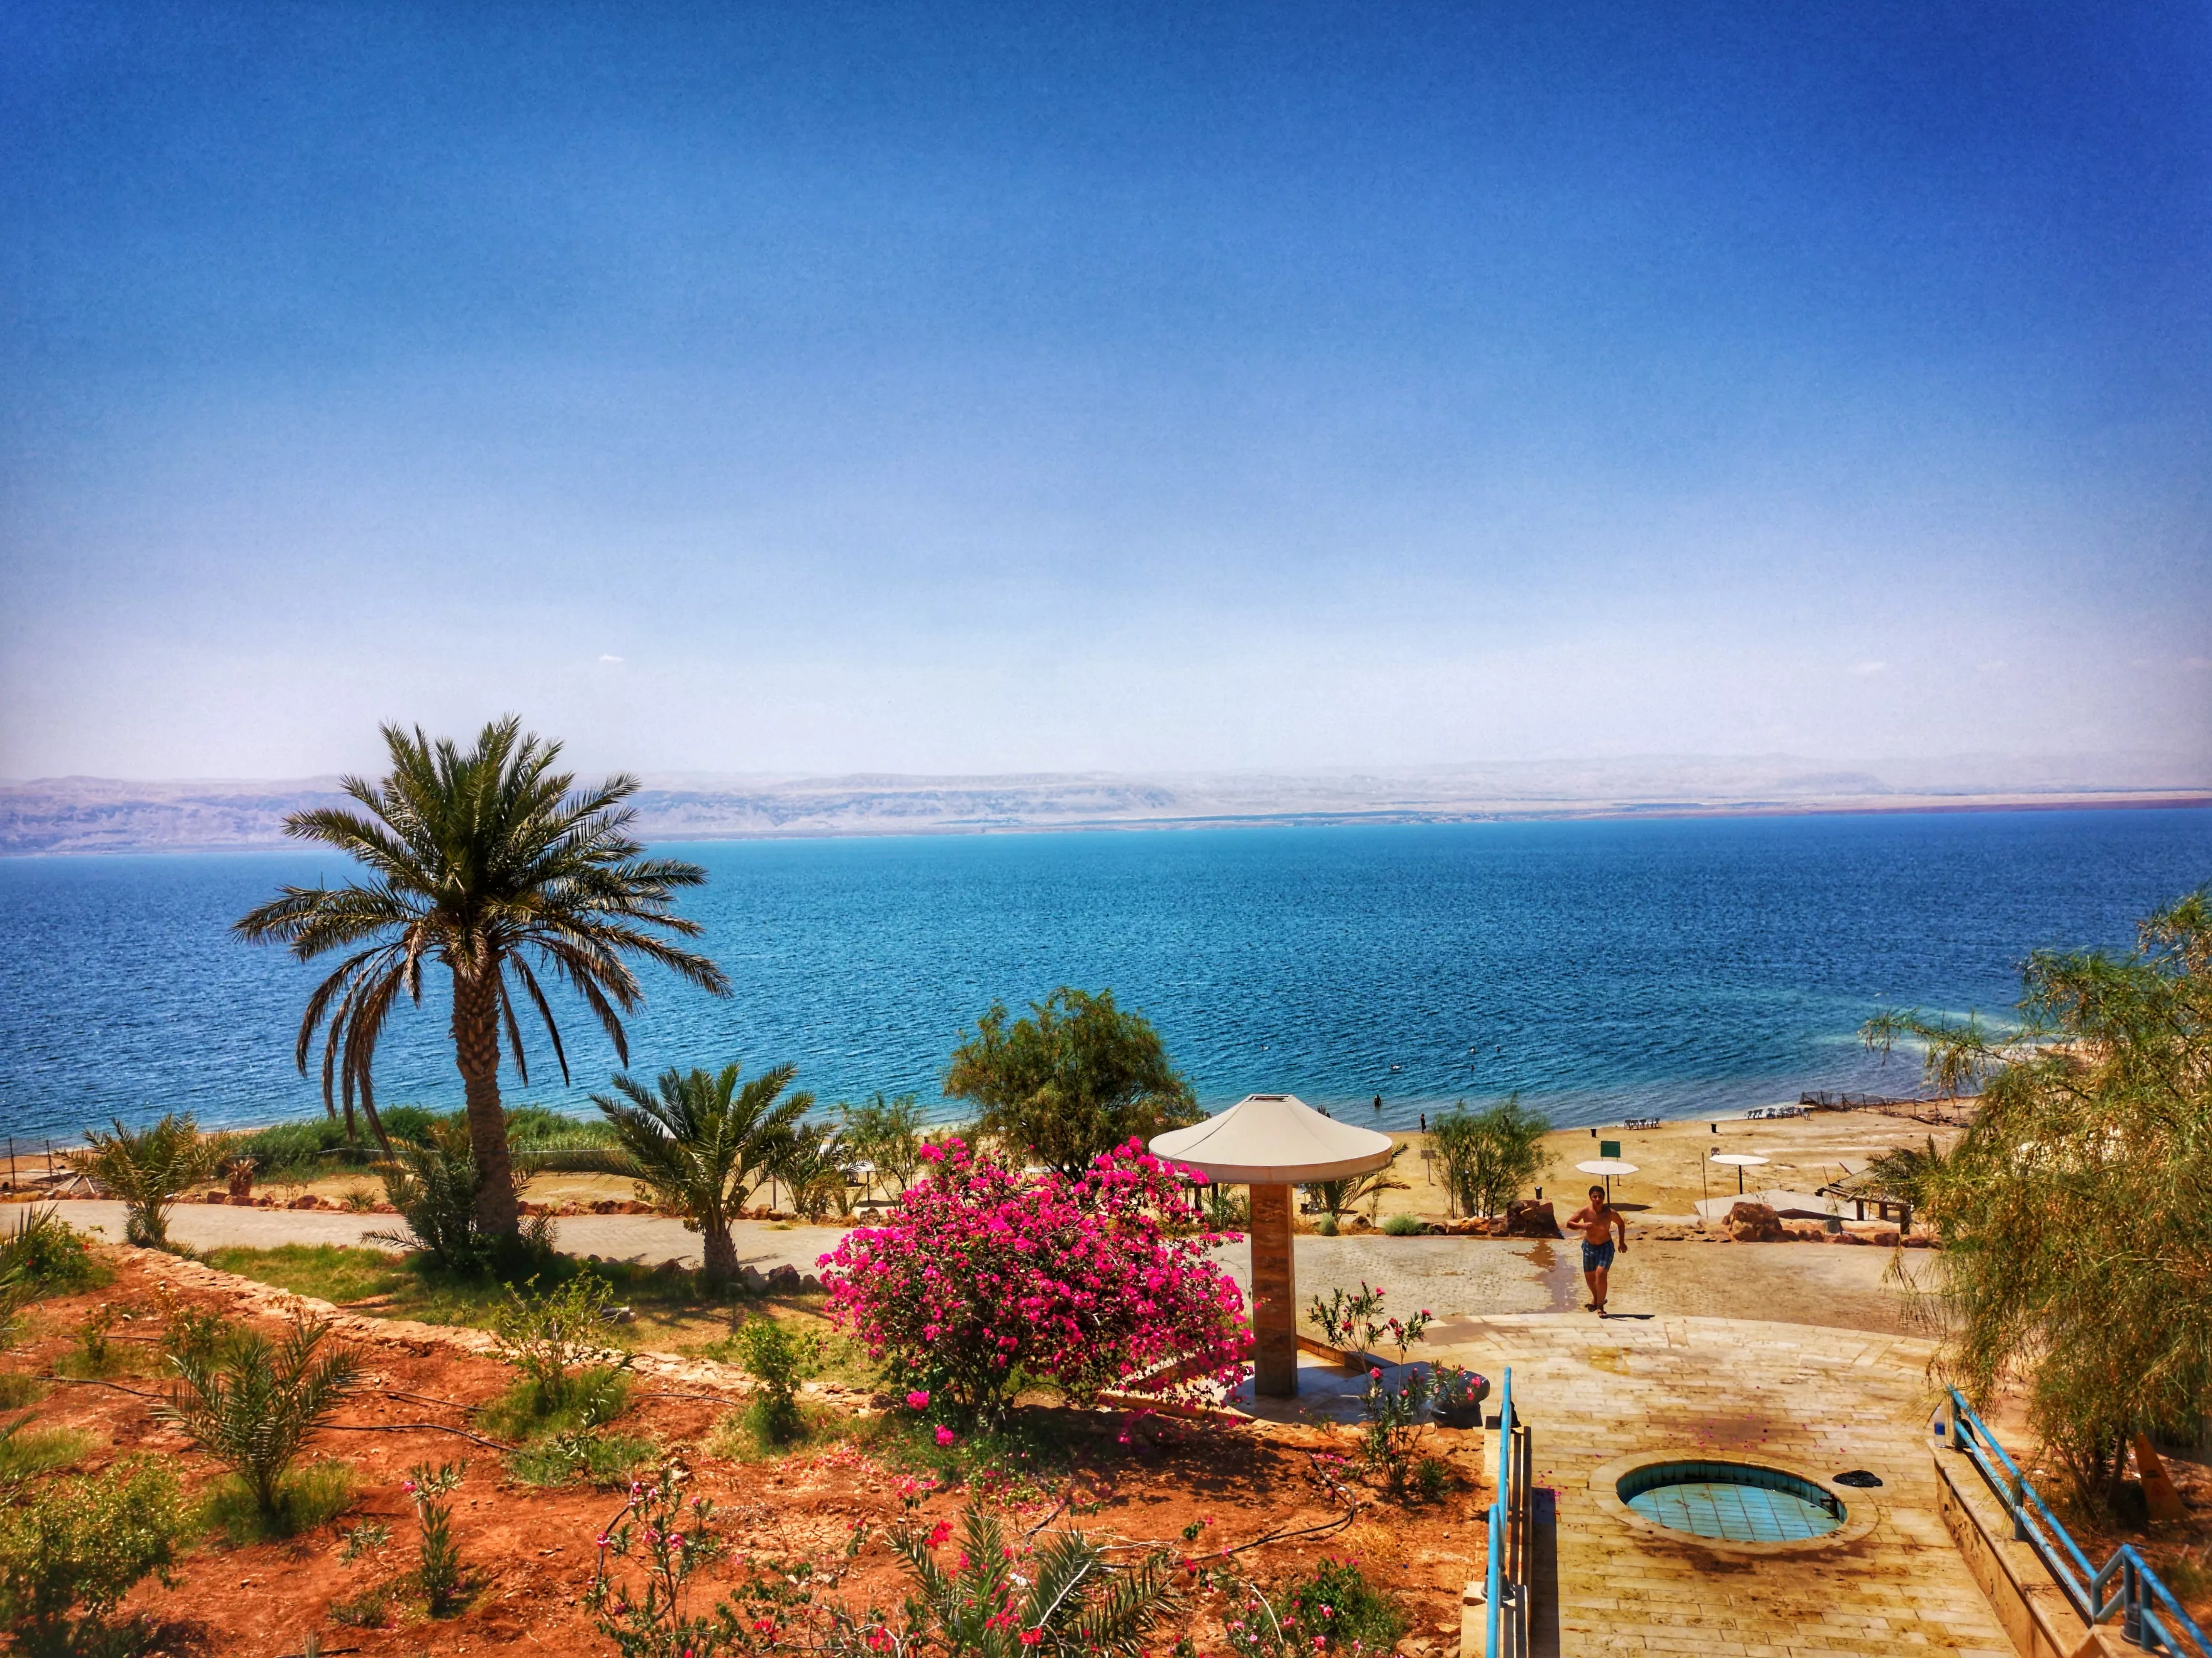 Dead Sea Beach in Jordan, Middle East | Beaches - Rated 3.4